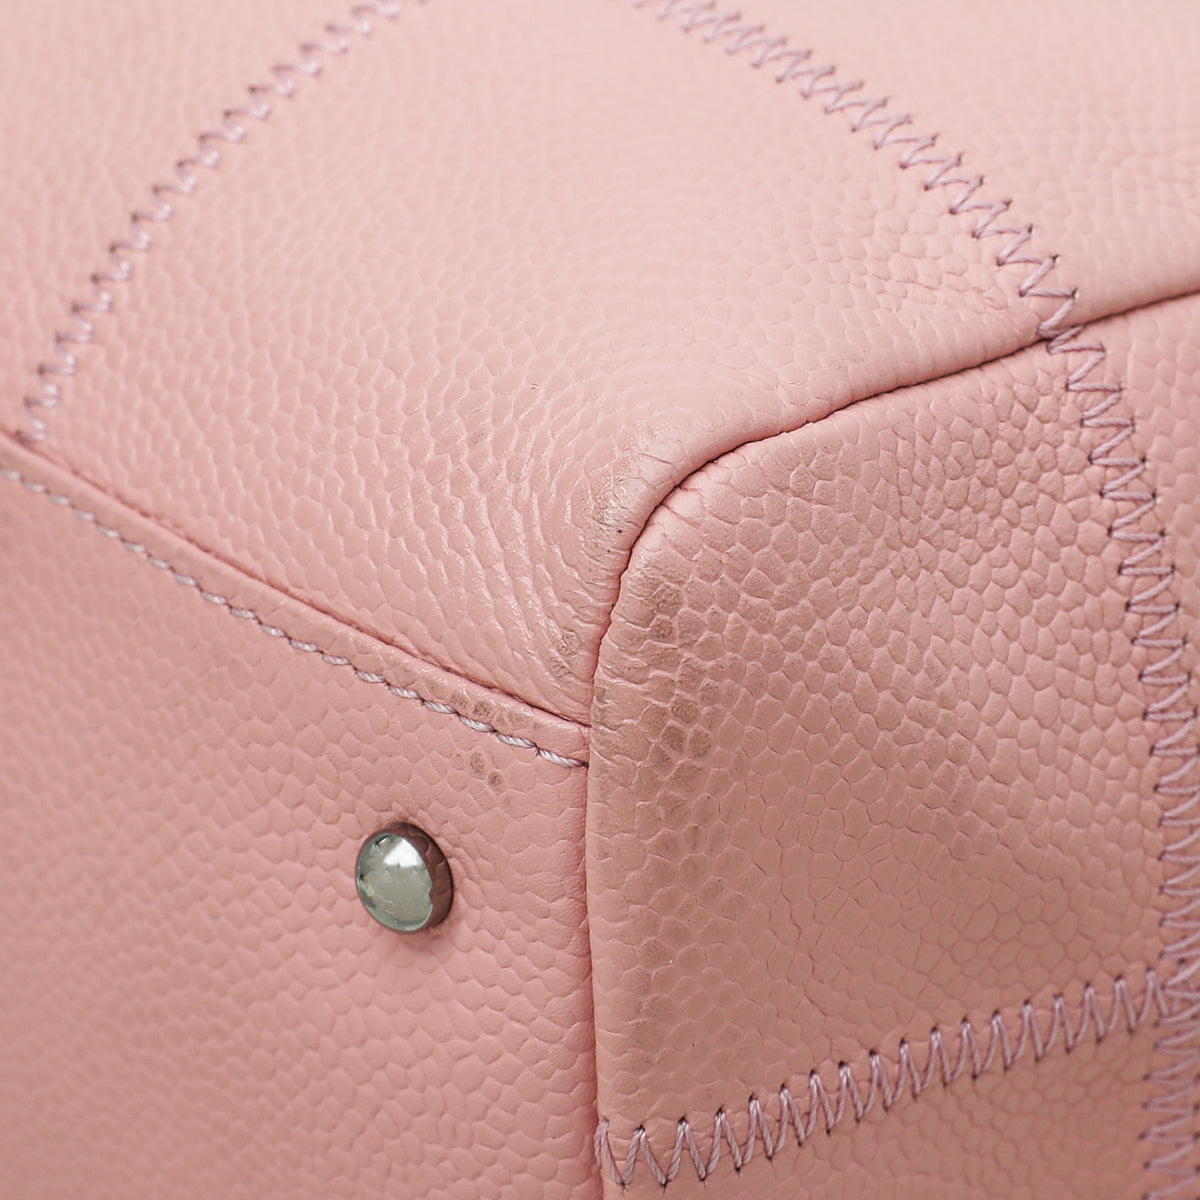 Chanel Pink Lax Bowler Bag